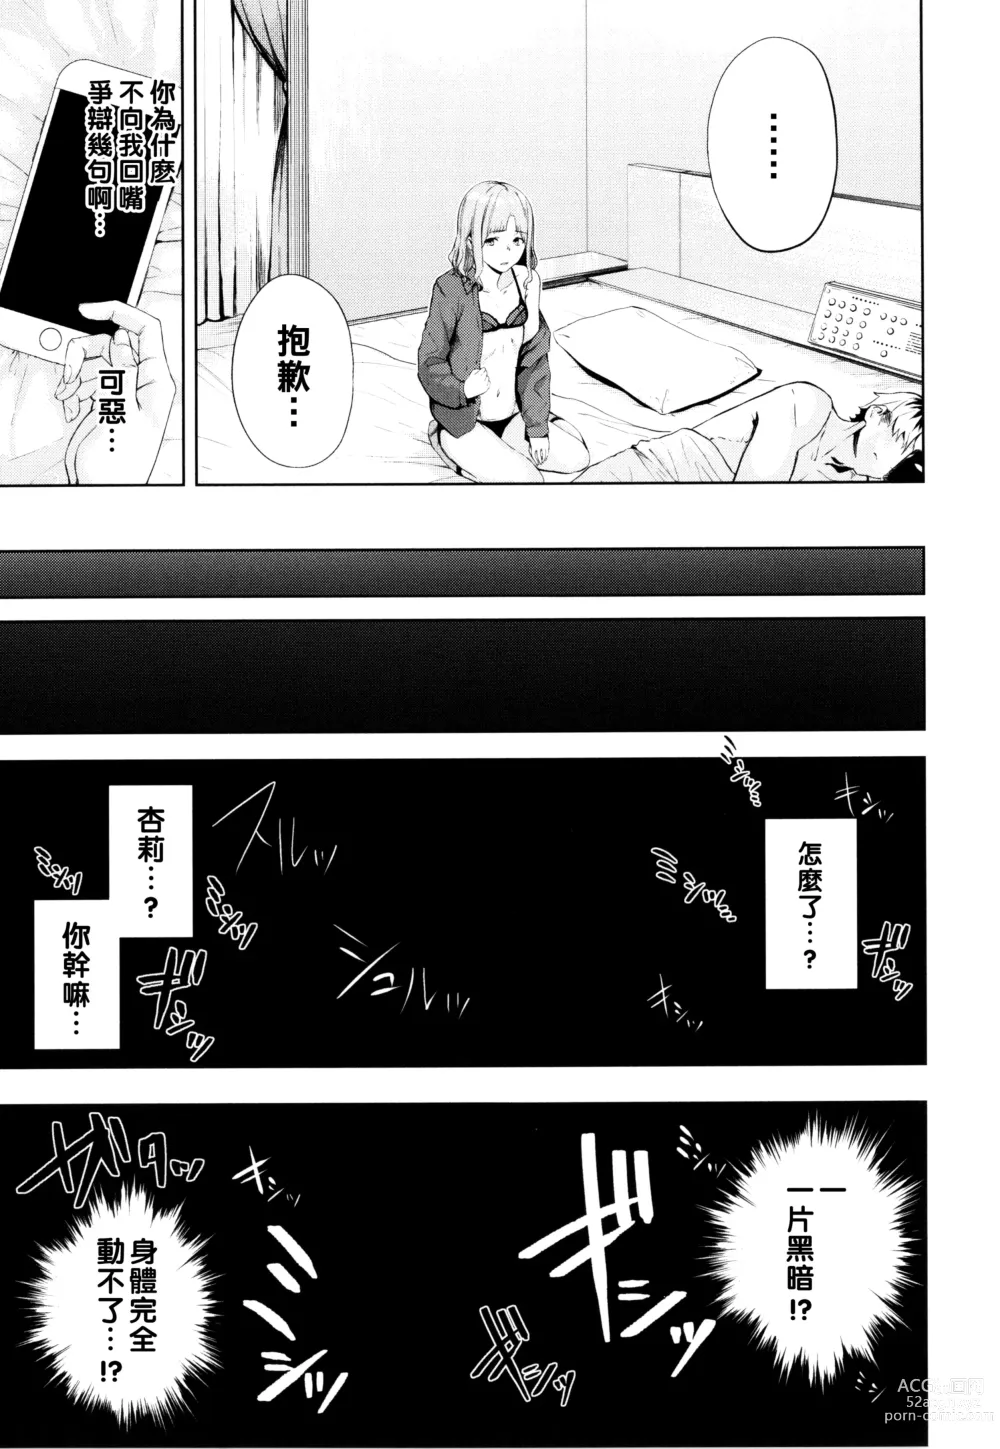 Page 3 of manga Mekakushi